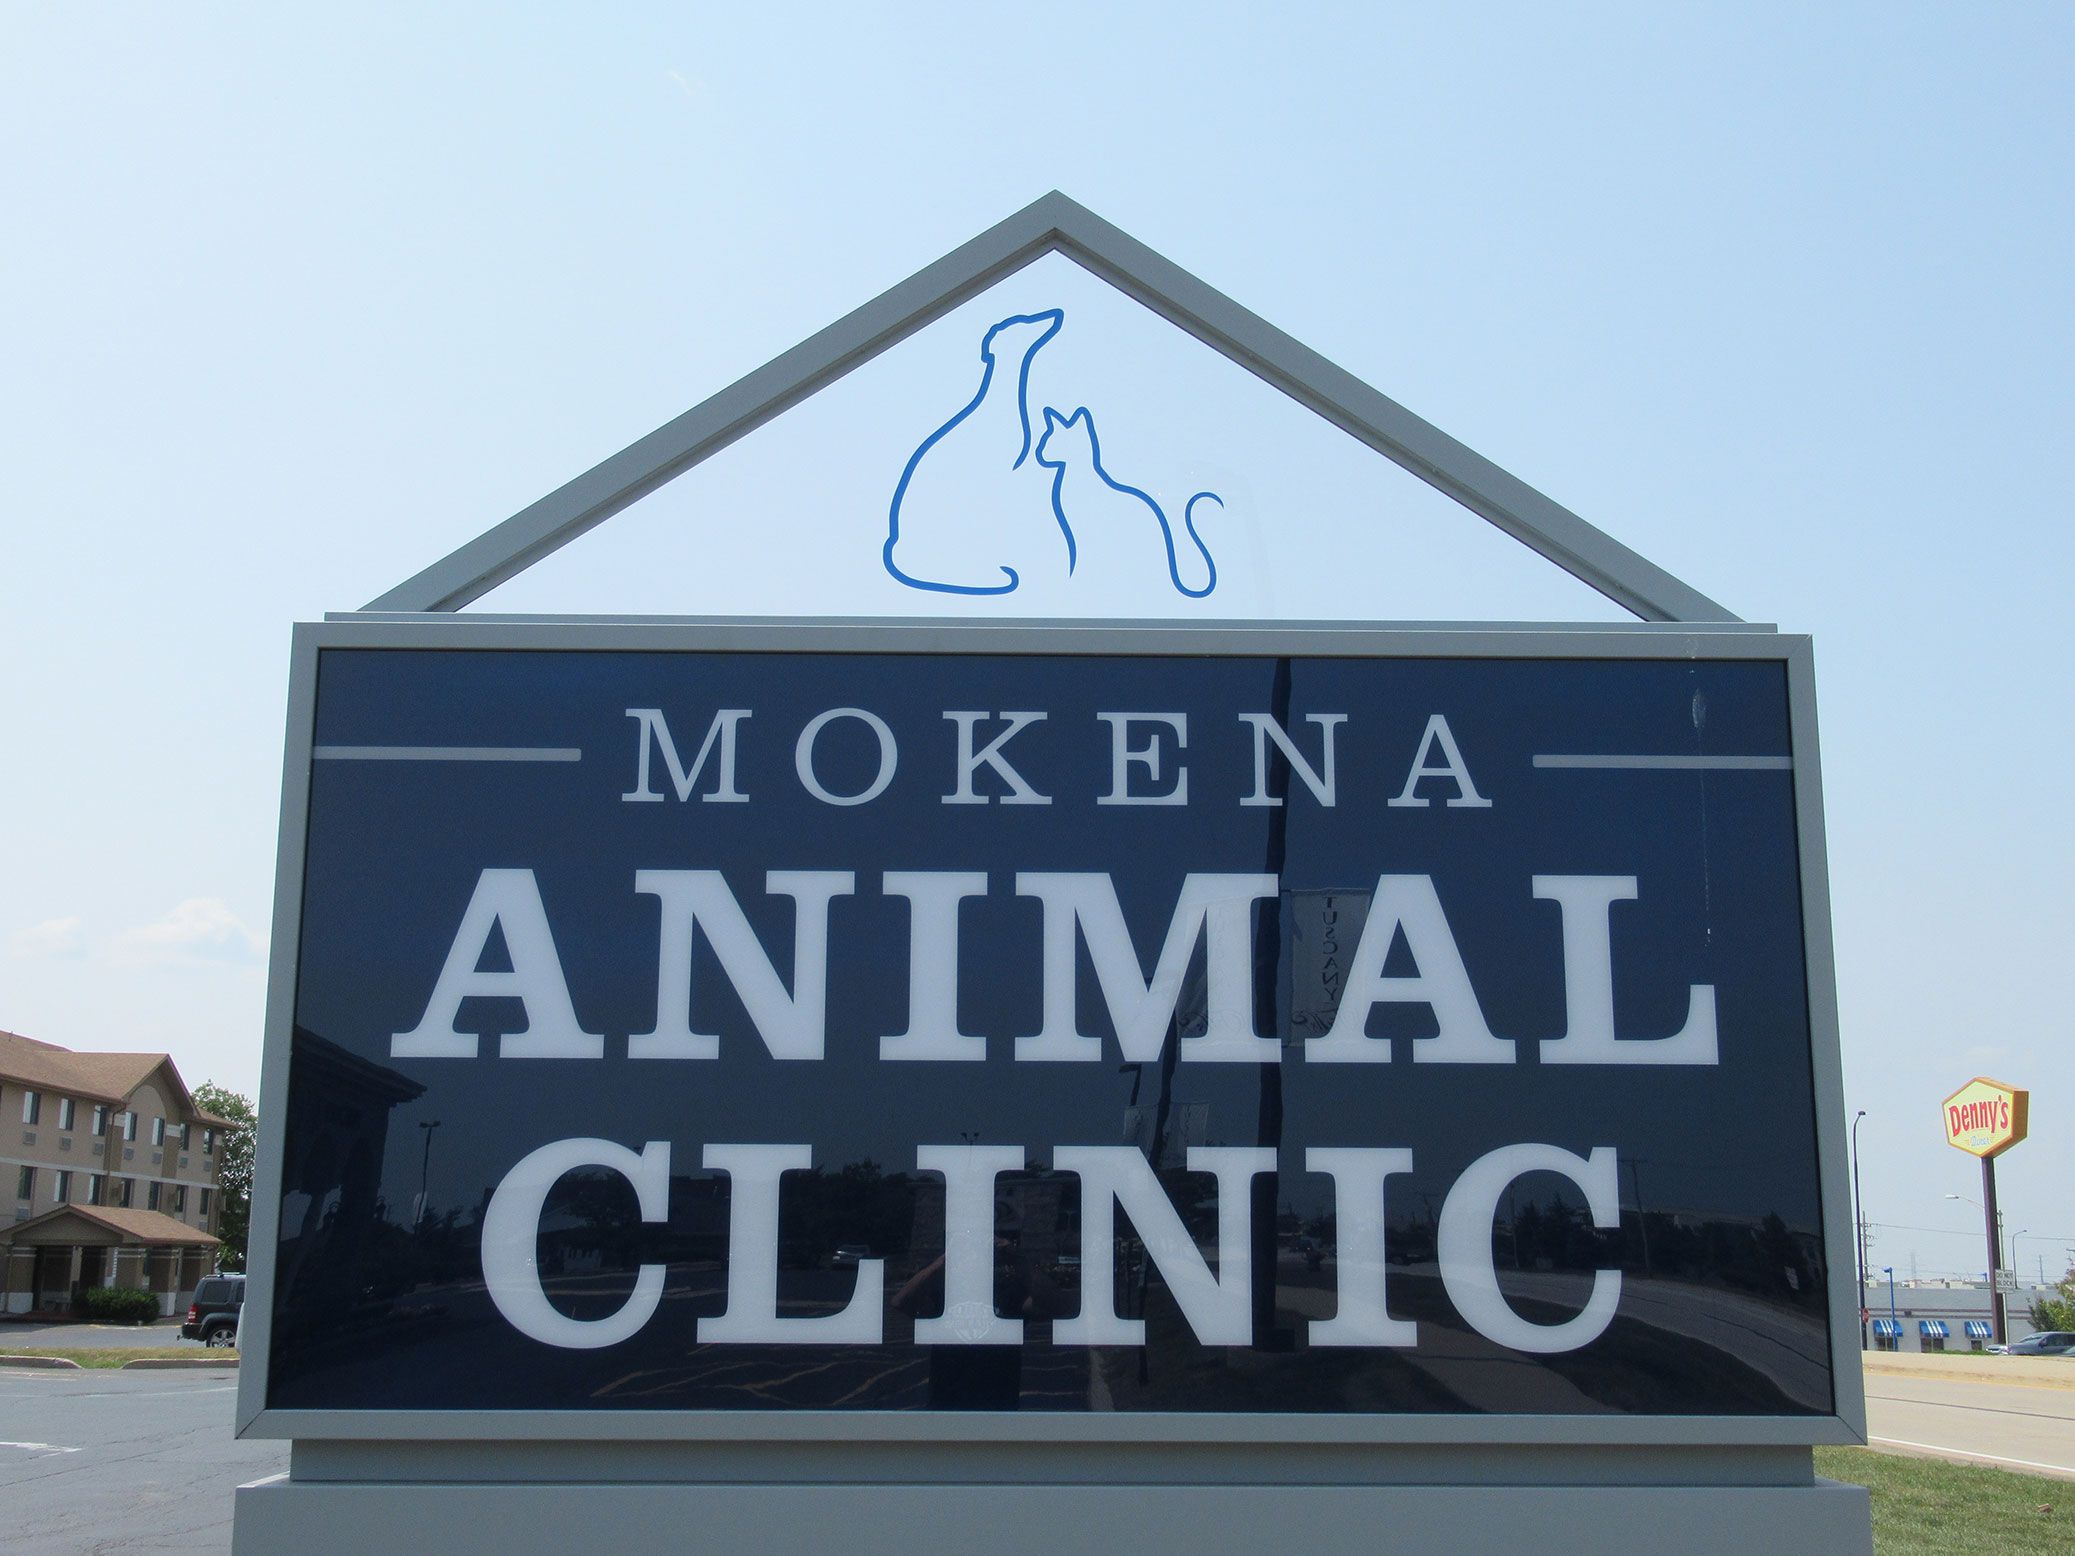 Mokena Animal Clinic